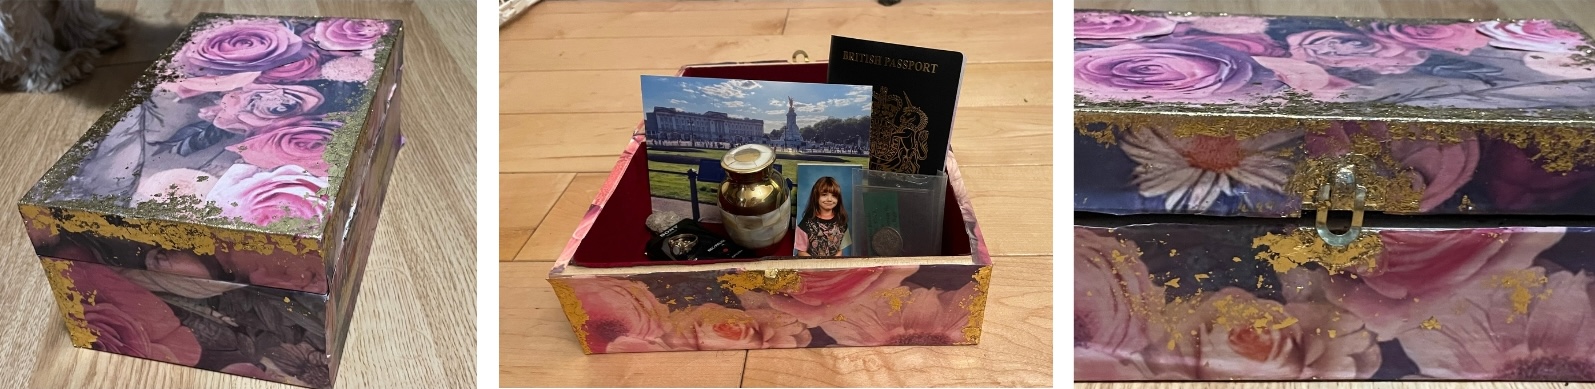 Rebecca Zifarellie reliquary box